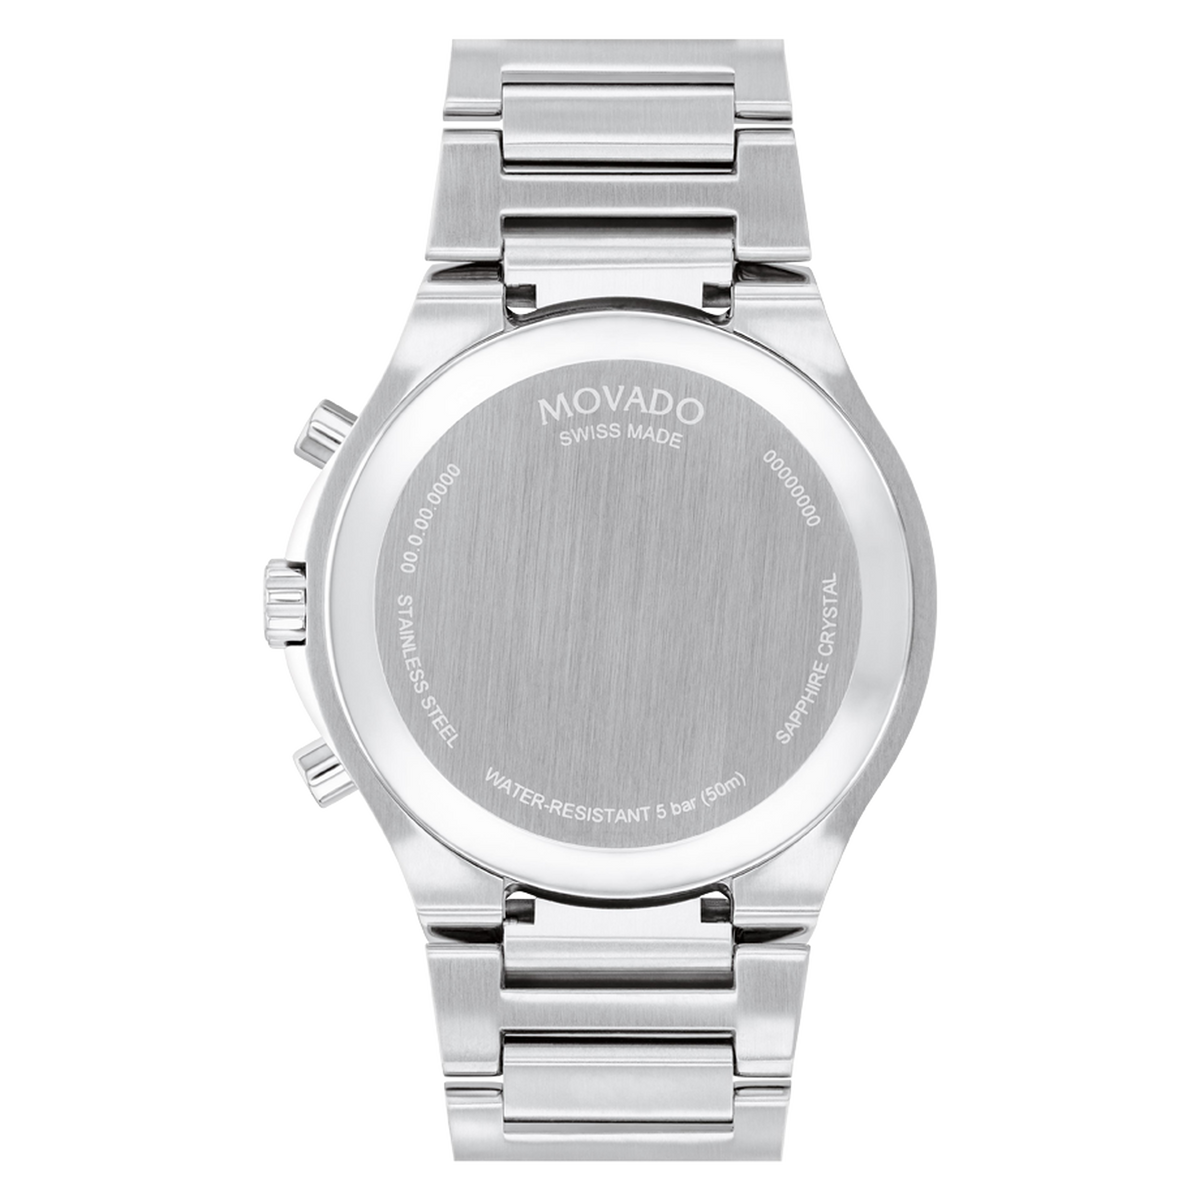 Movado Watch SE Chrono - Blue Dial